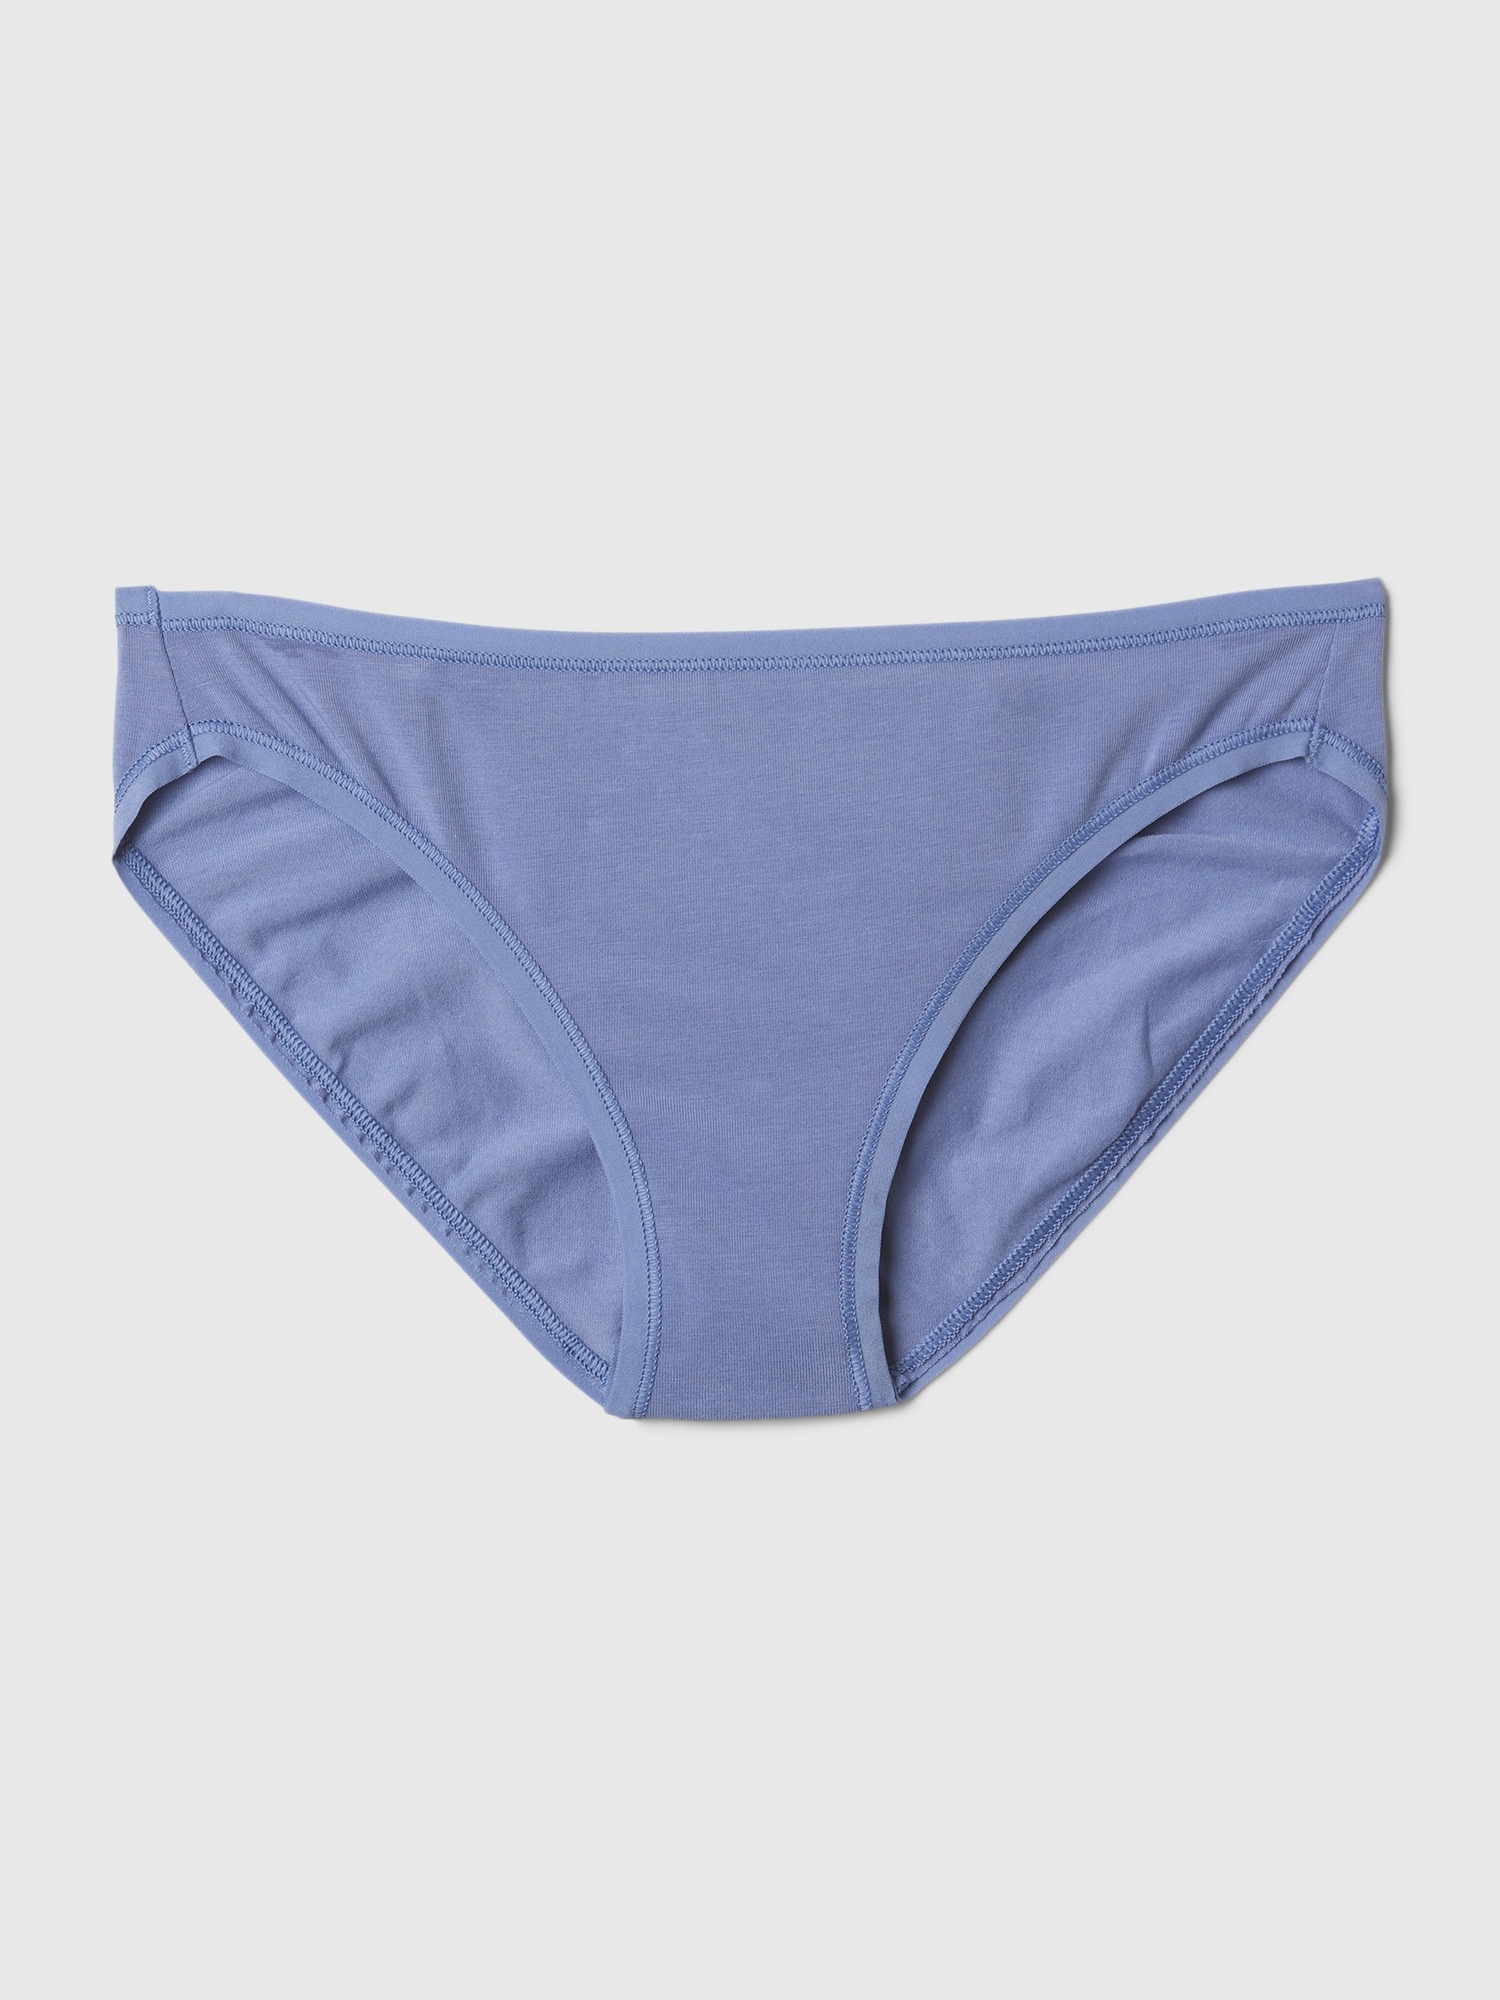 Gap Lace Bikini Undies Stretch Cotton Women's Underwear Panties 1